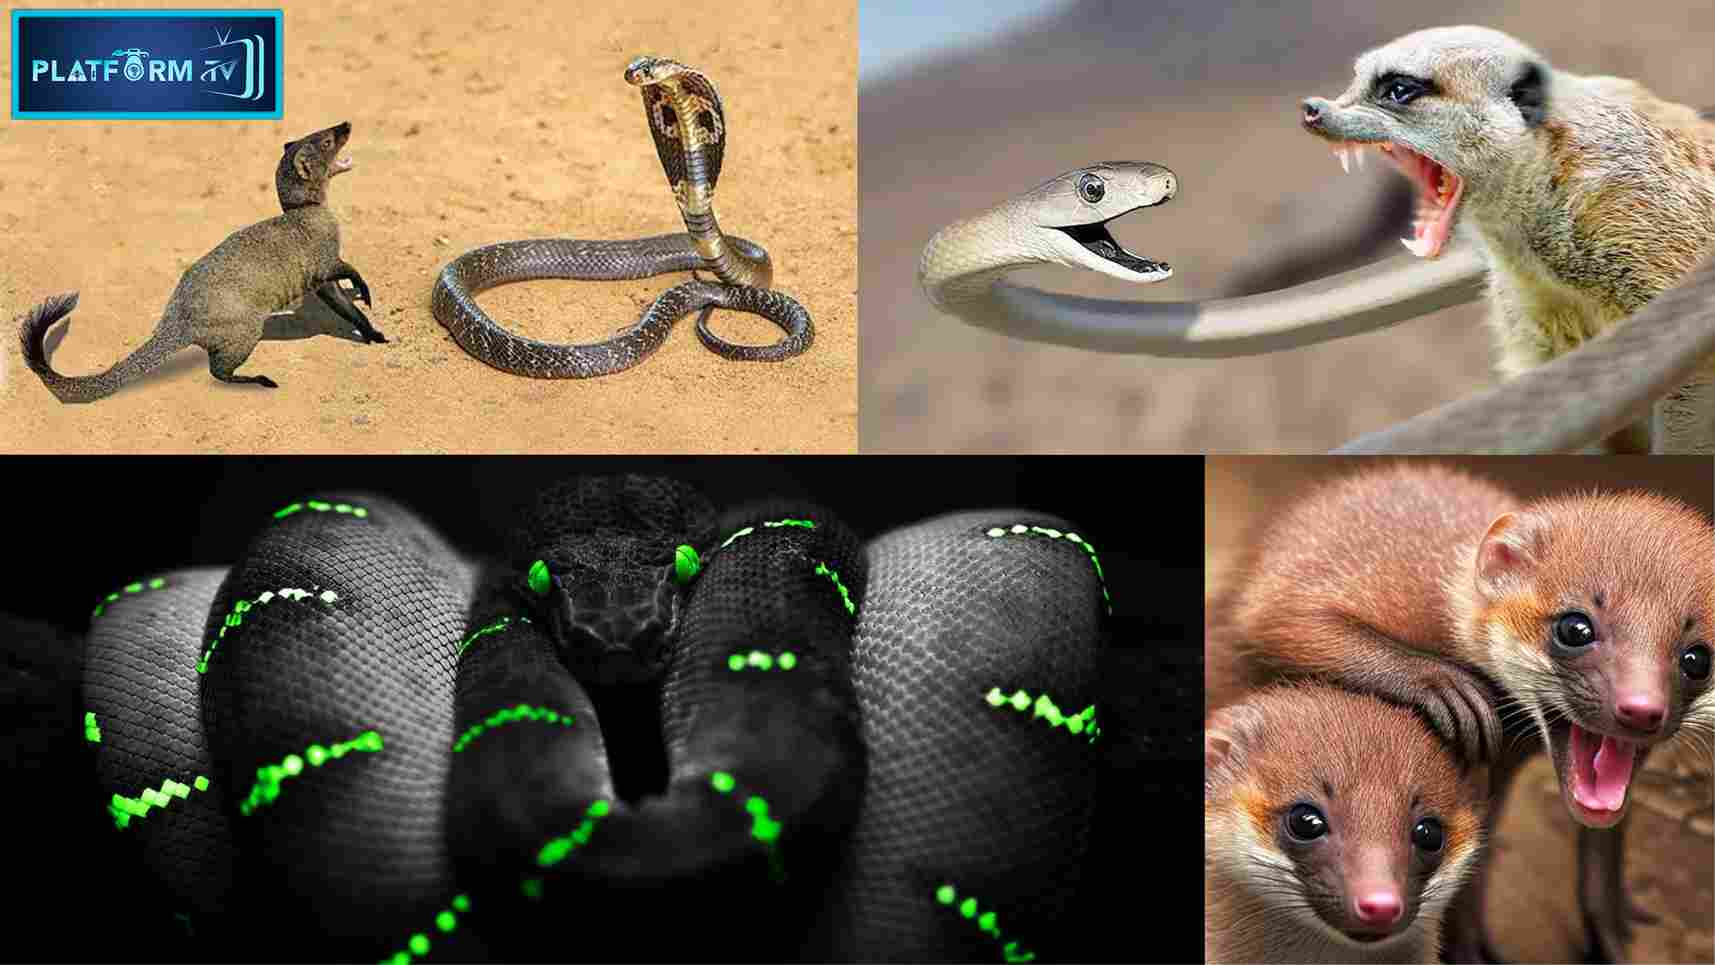 Snake vs Mongoose - Platform Tamil